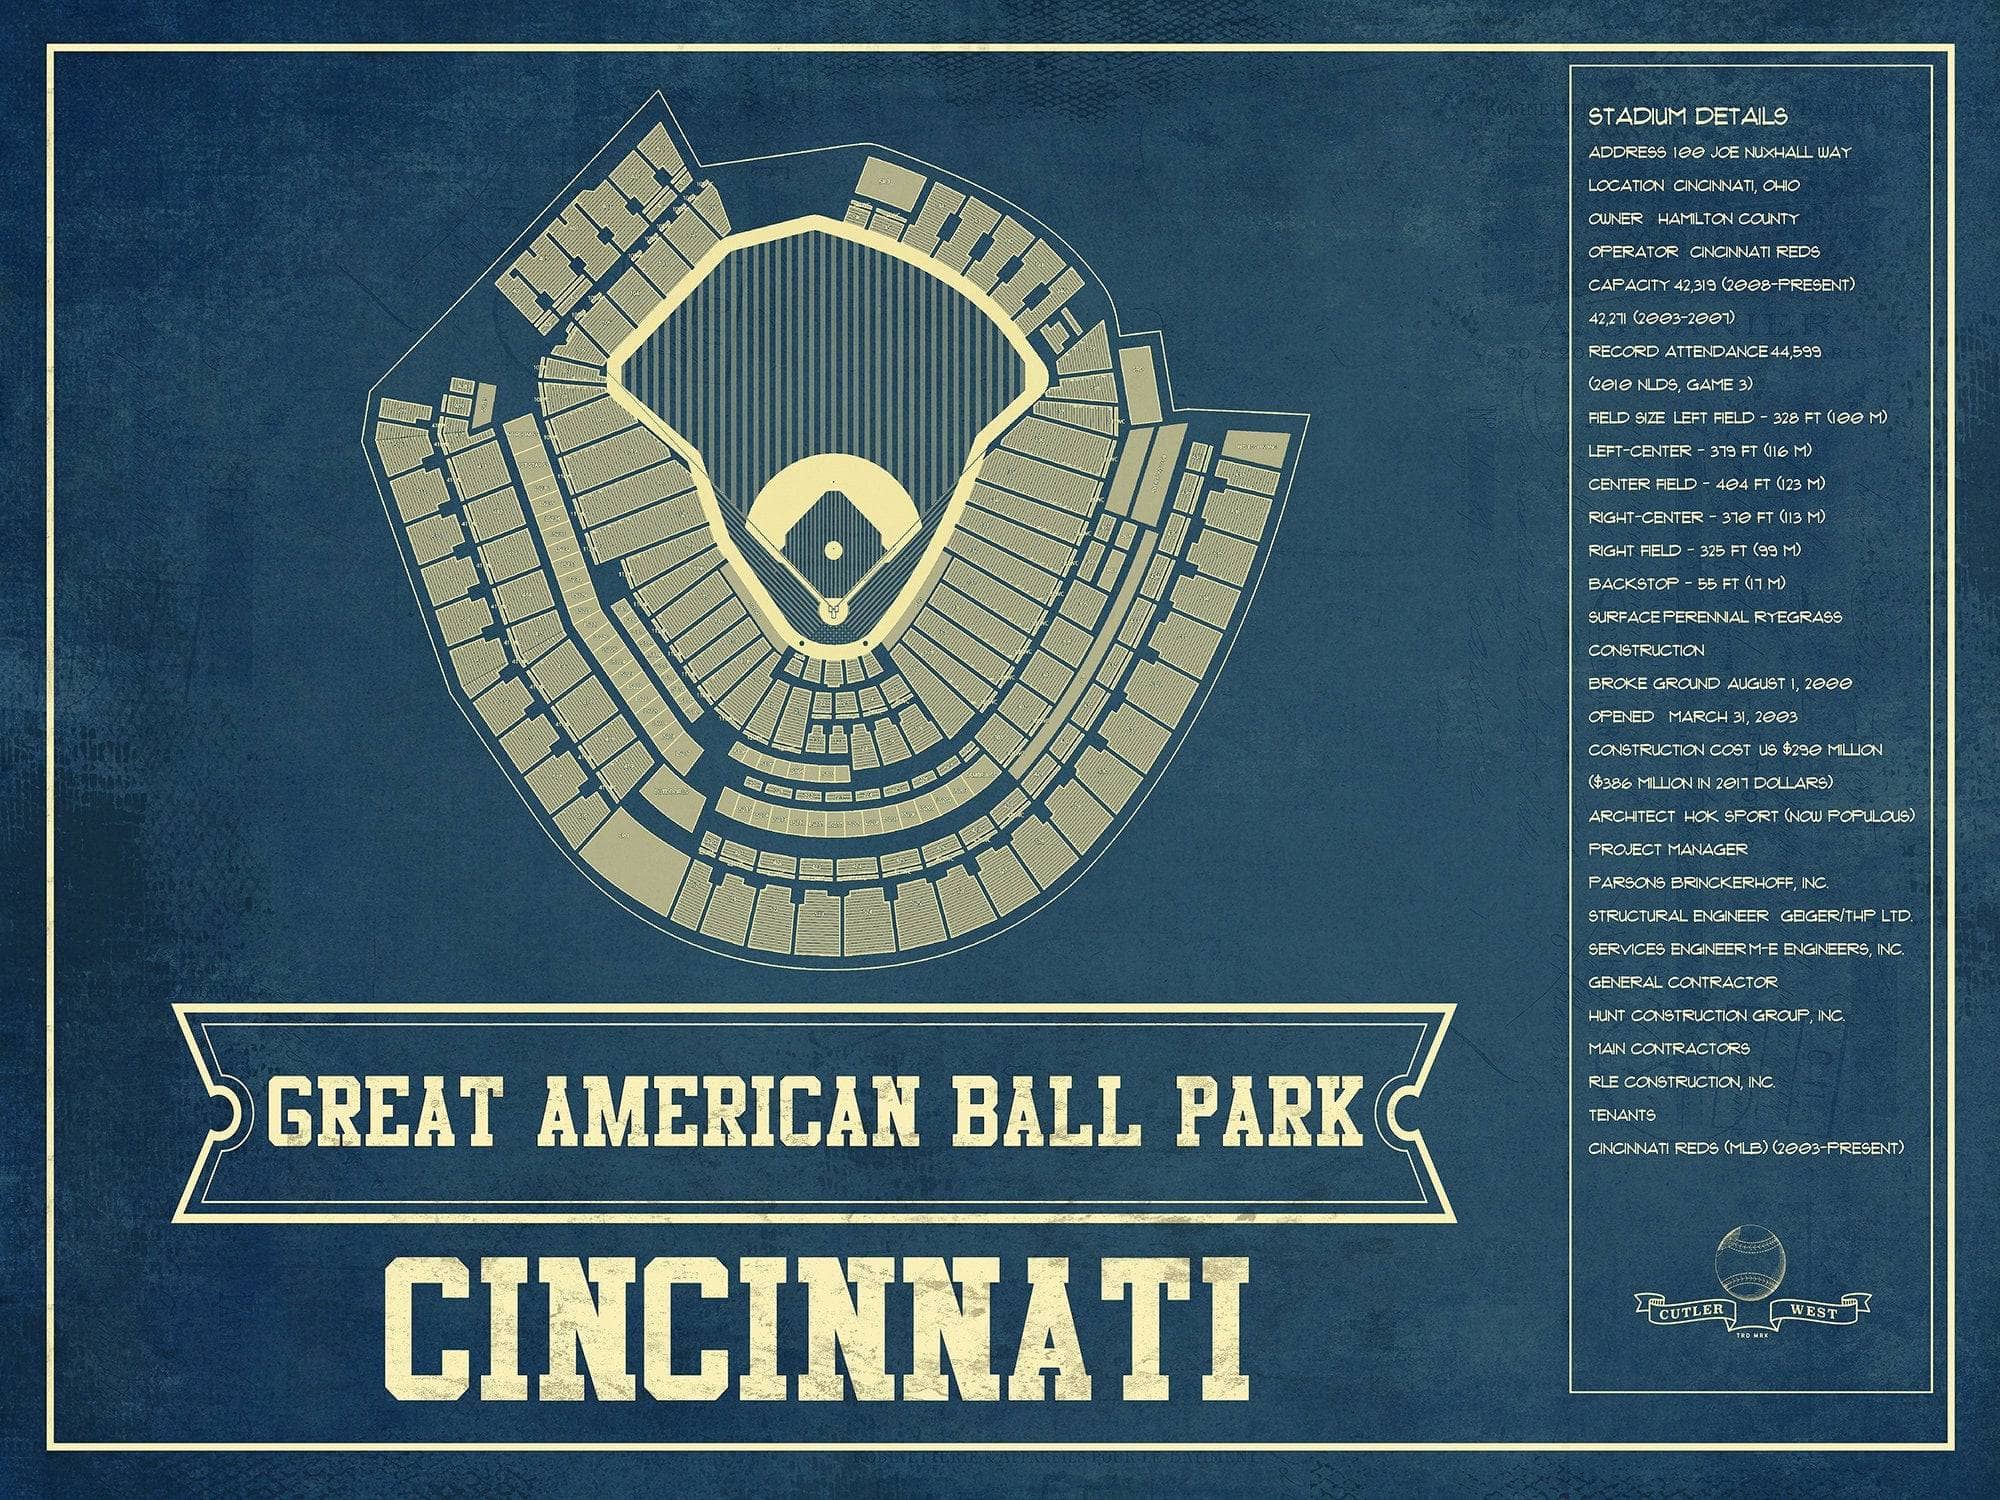 Cincinnati Reds Seating Chart - Great American Ball Park